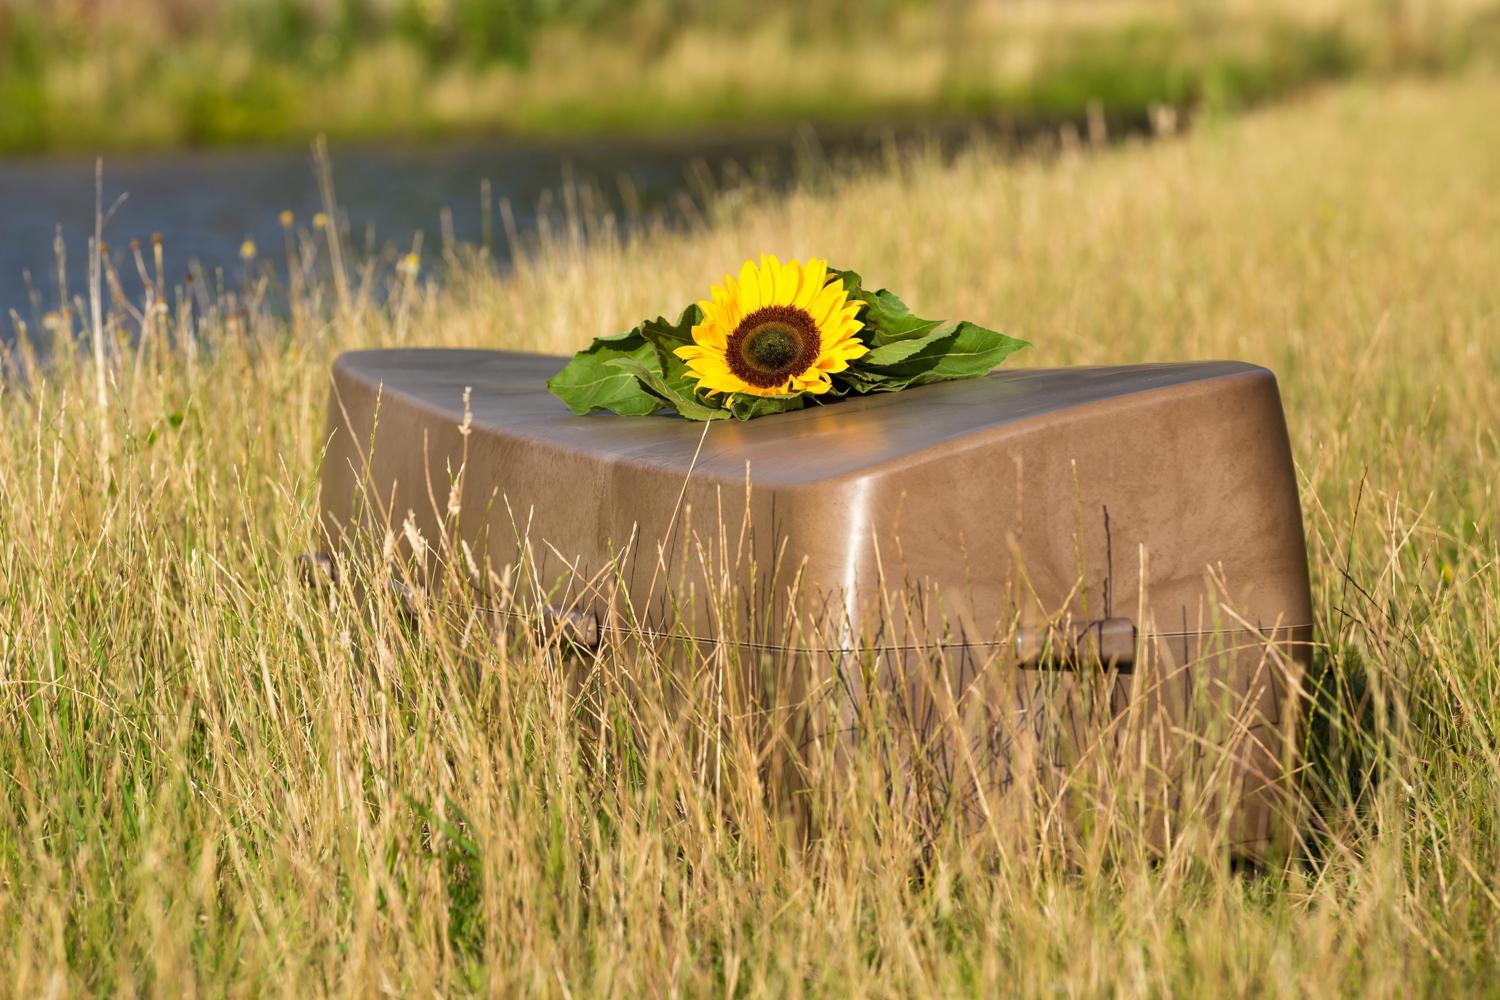 Onora in Brabant develops organic coffin - Brabant Brand Box